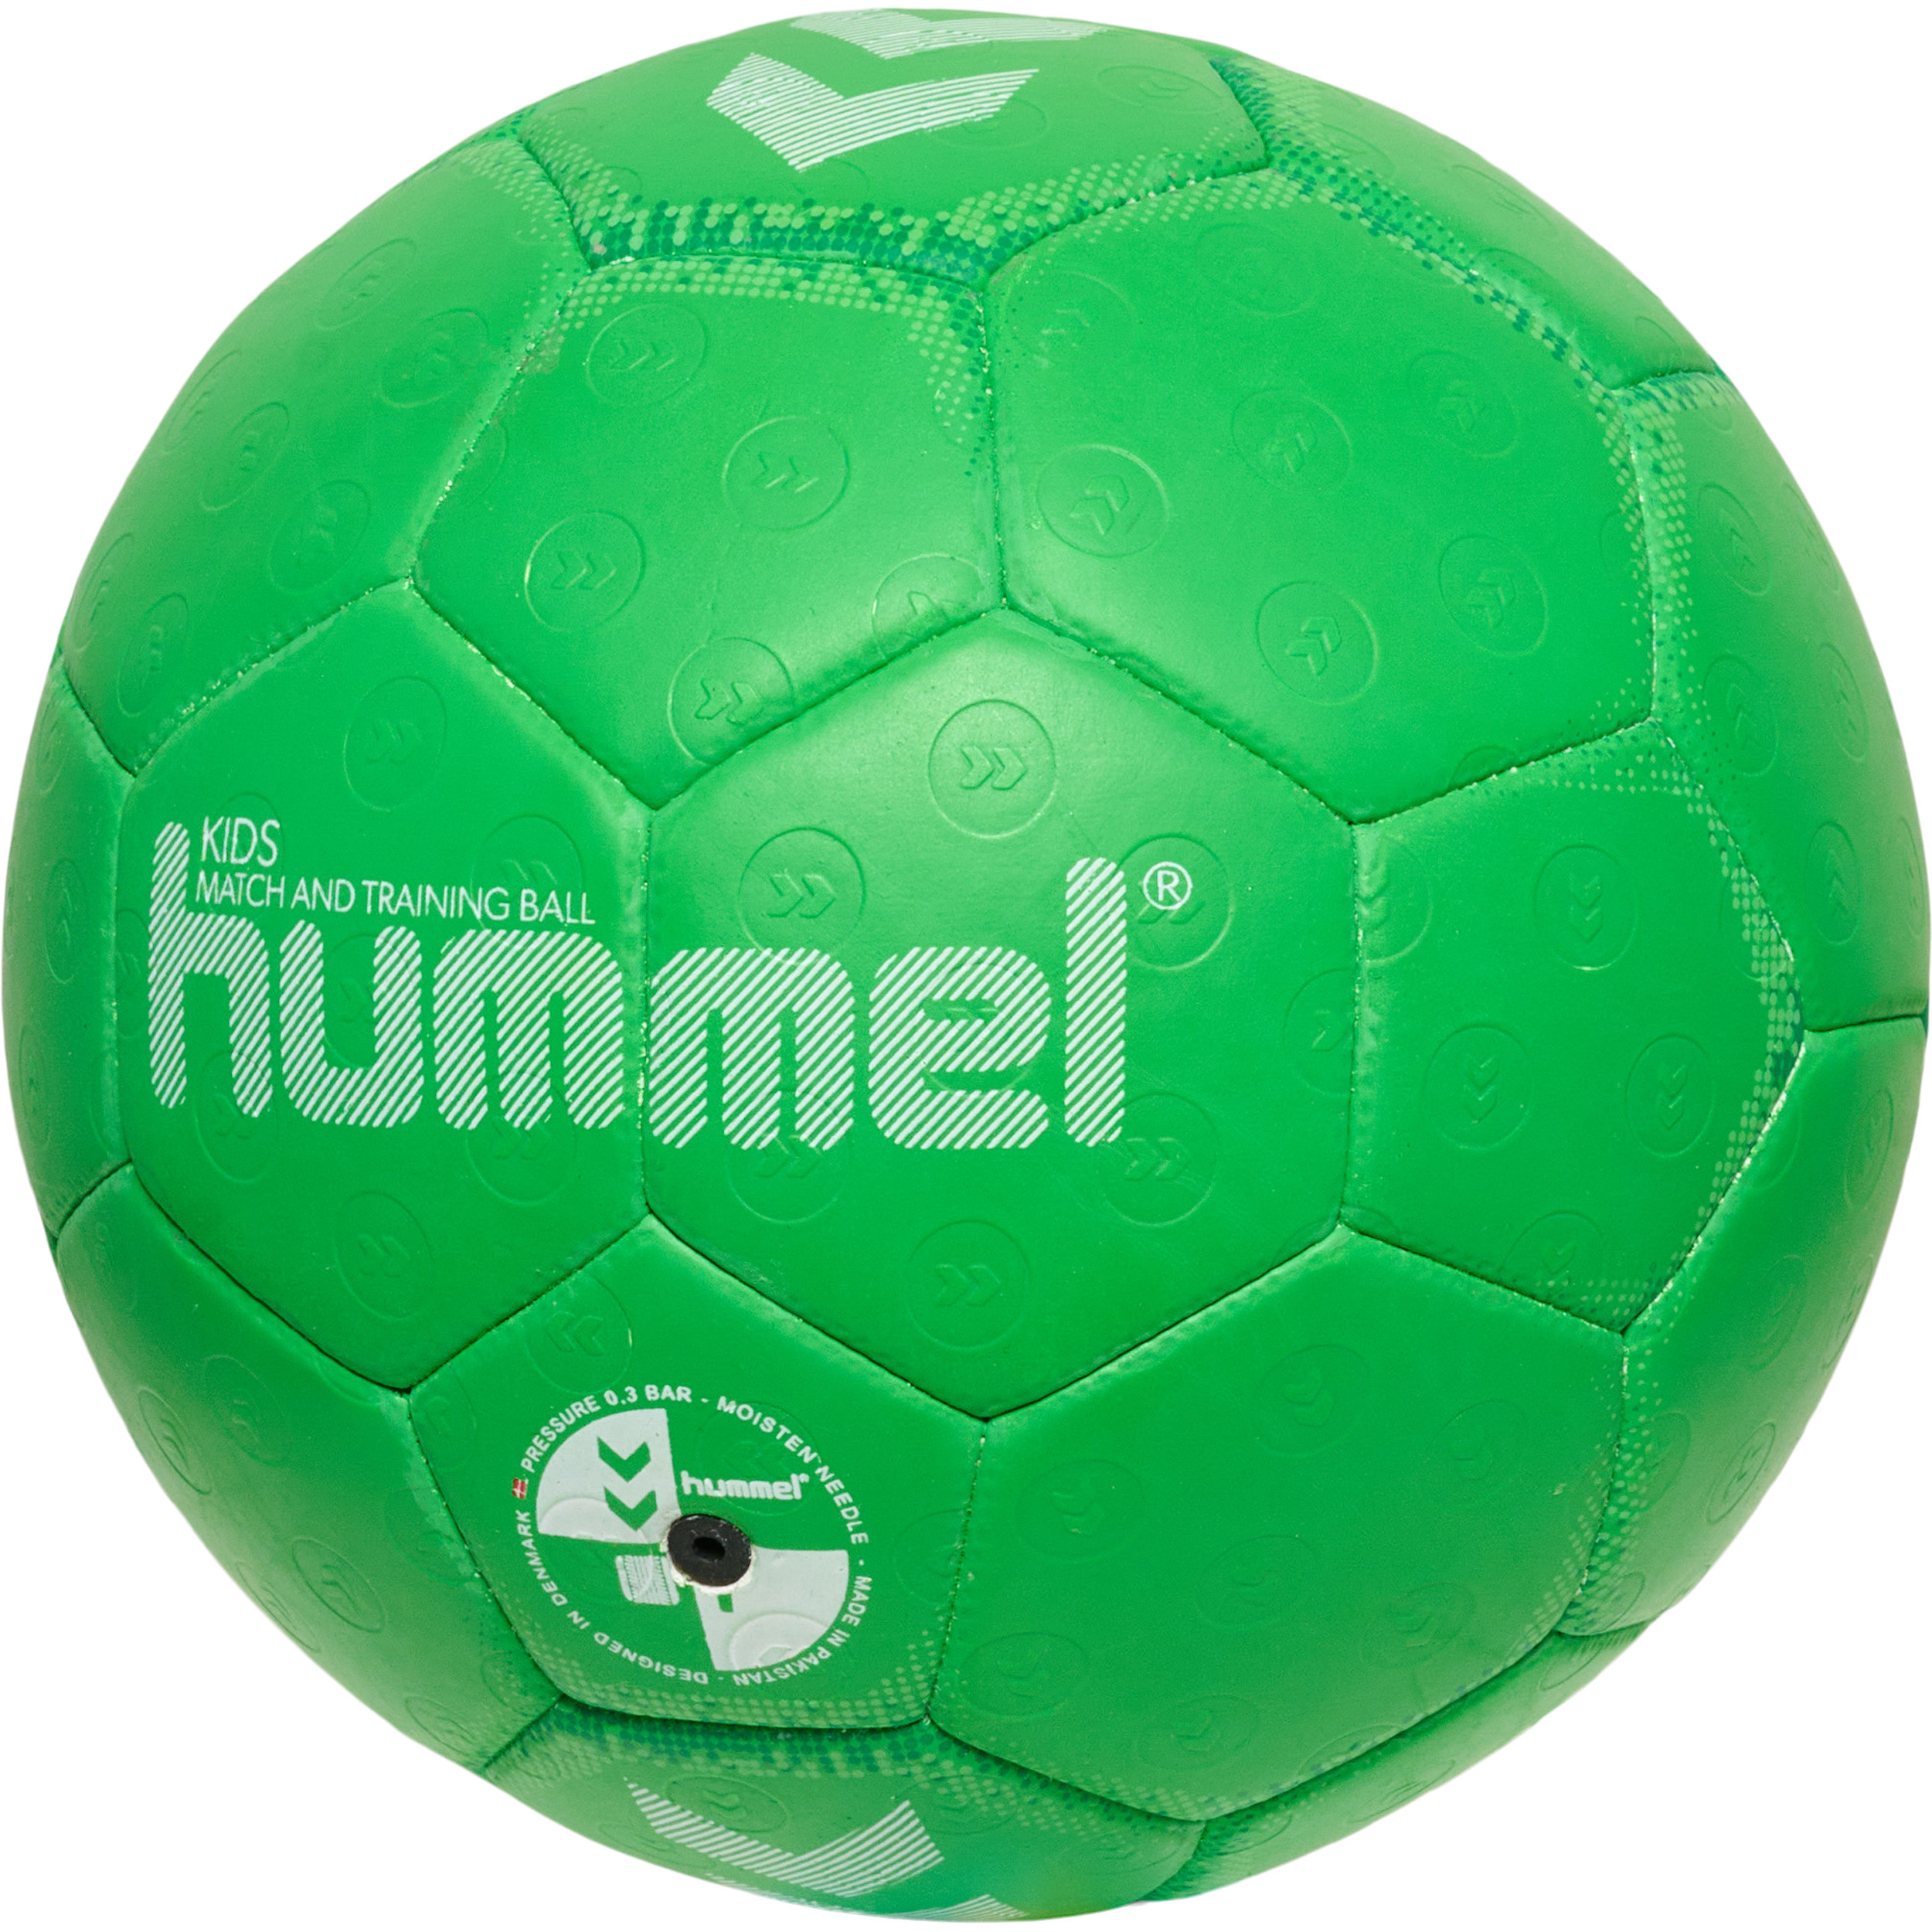 Hummel Handball Kinder